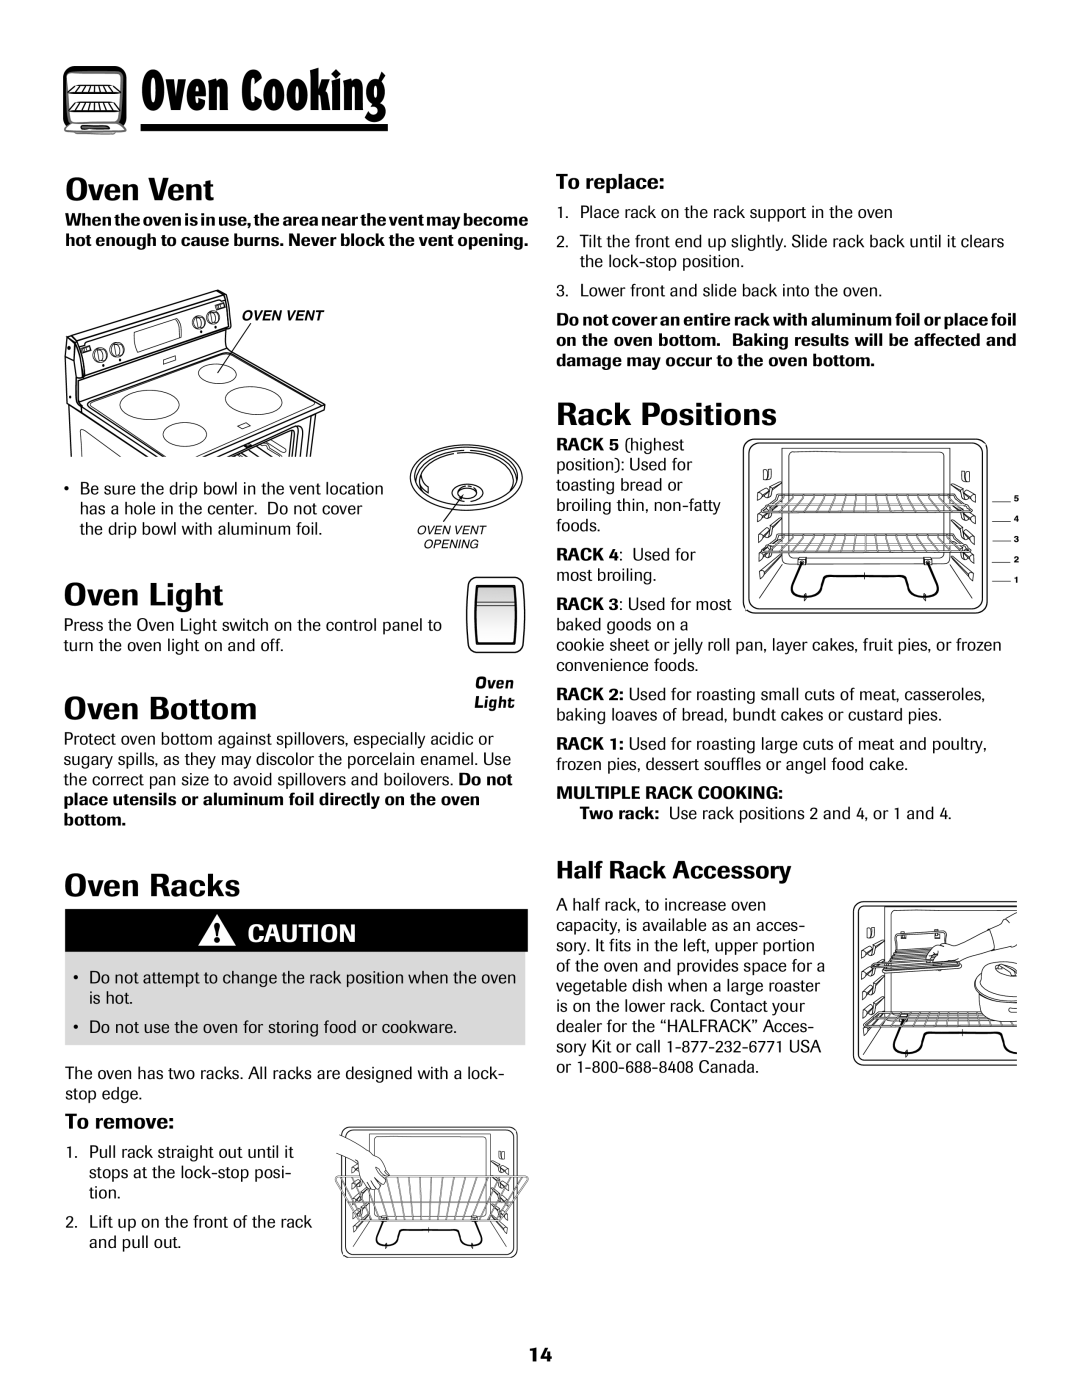 Amana Electronic Range warranty Oven Vent, Oven Light, Oven Bottom, Rack Positions, Oven Racks 